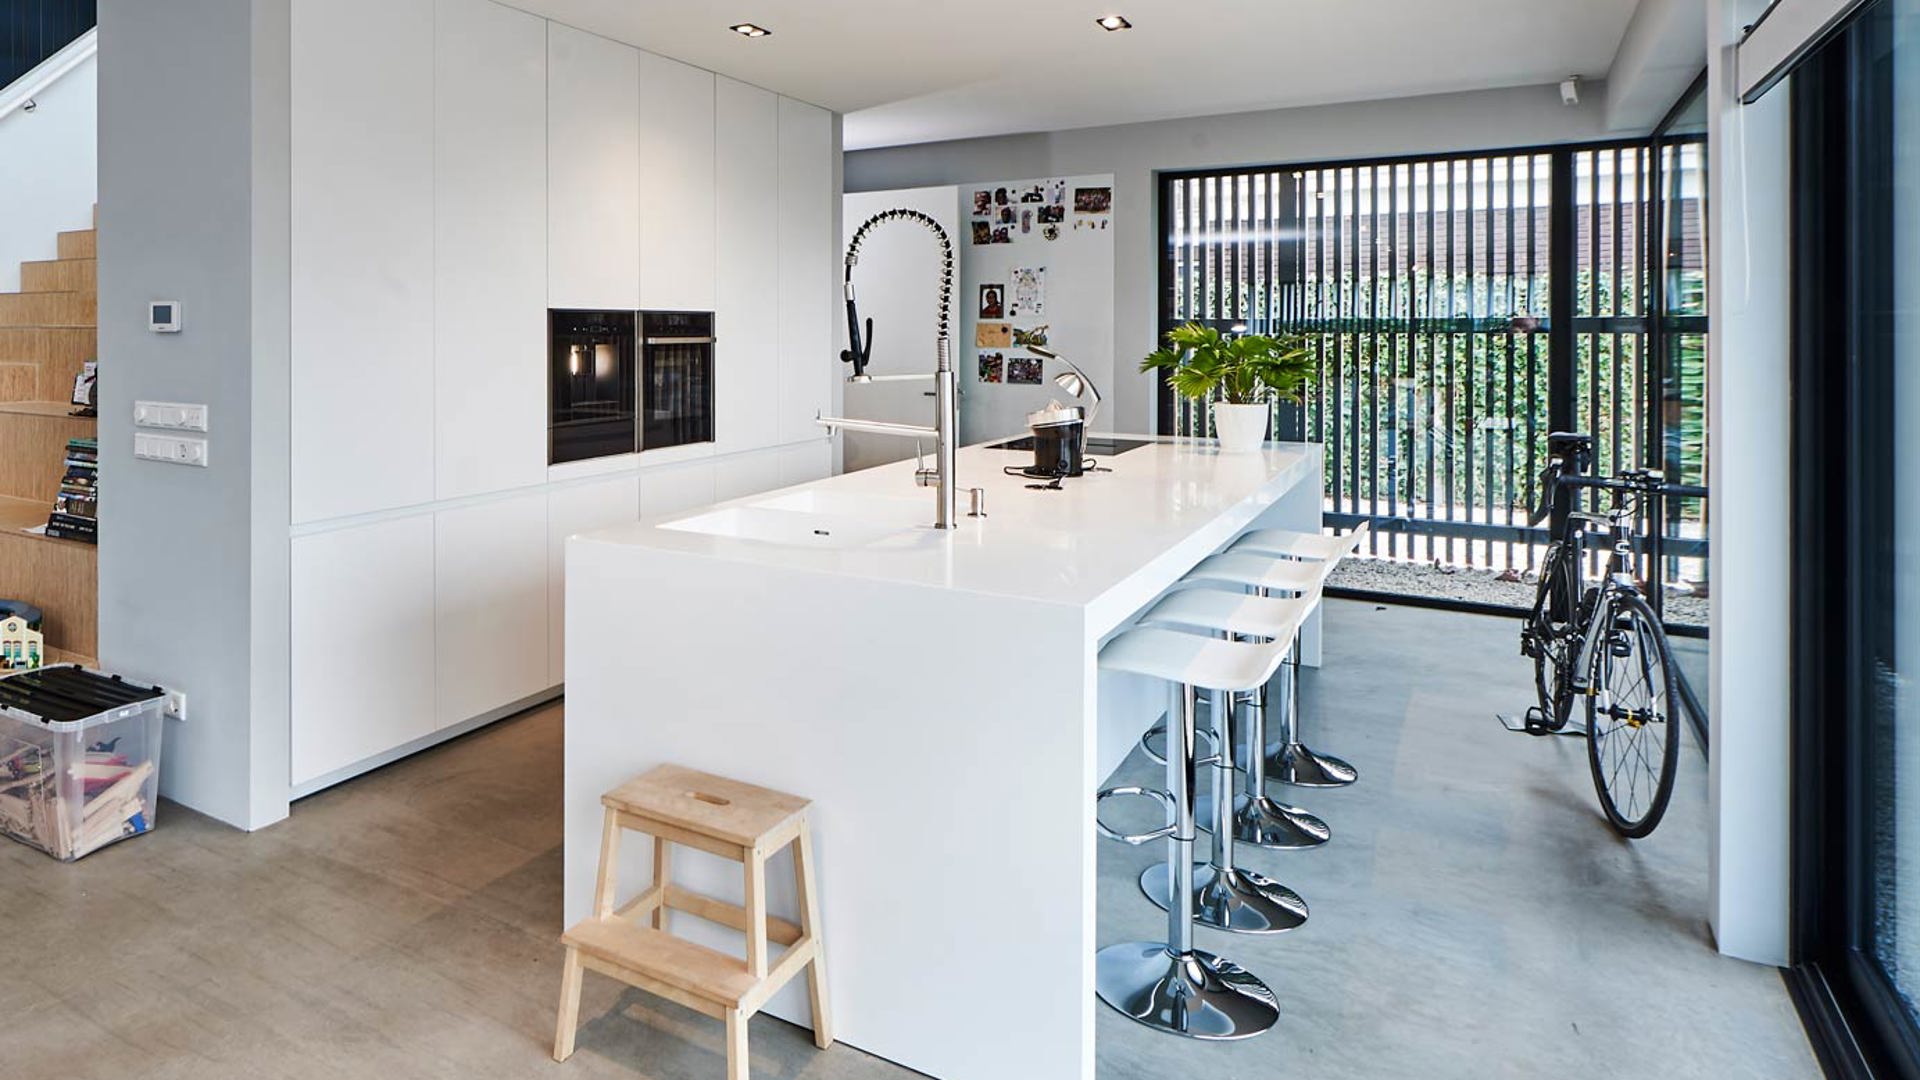 Moderne keuken met kookeiland en kastenwand in de kleur wit